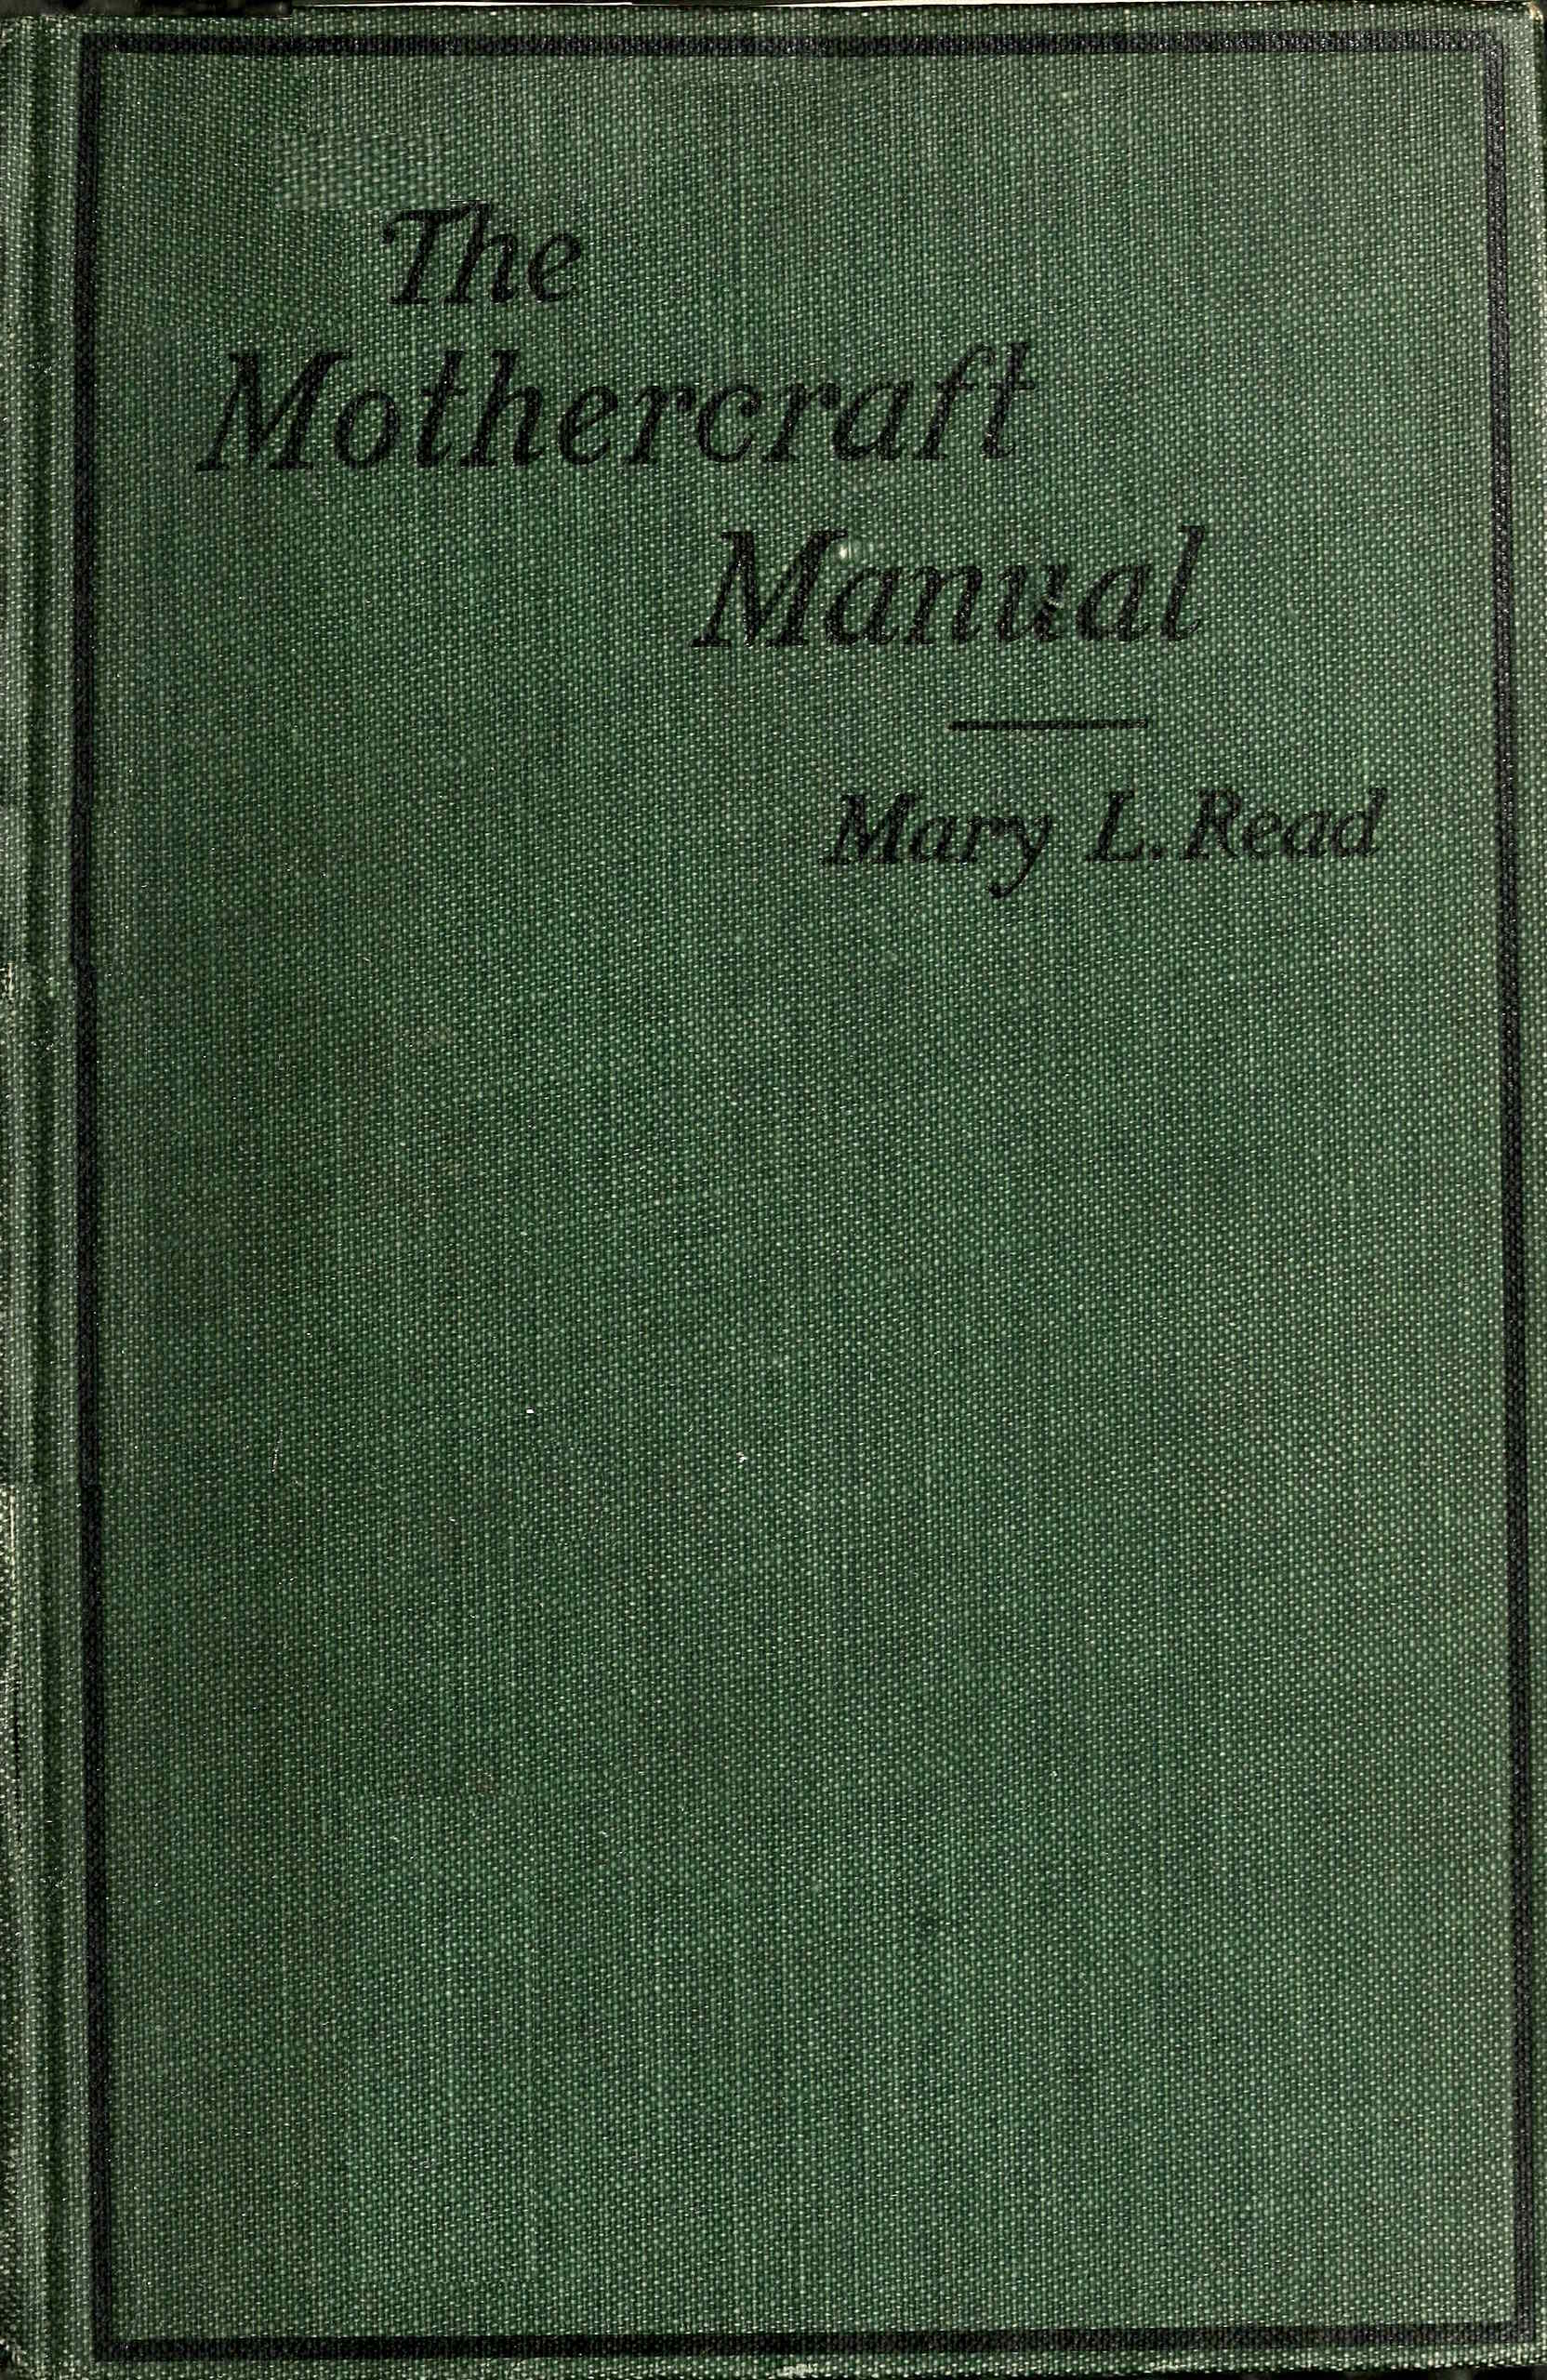 The Mothercraft Manual Project Gutenberg image